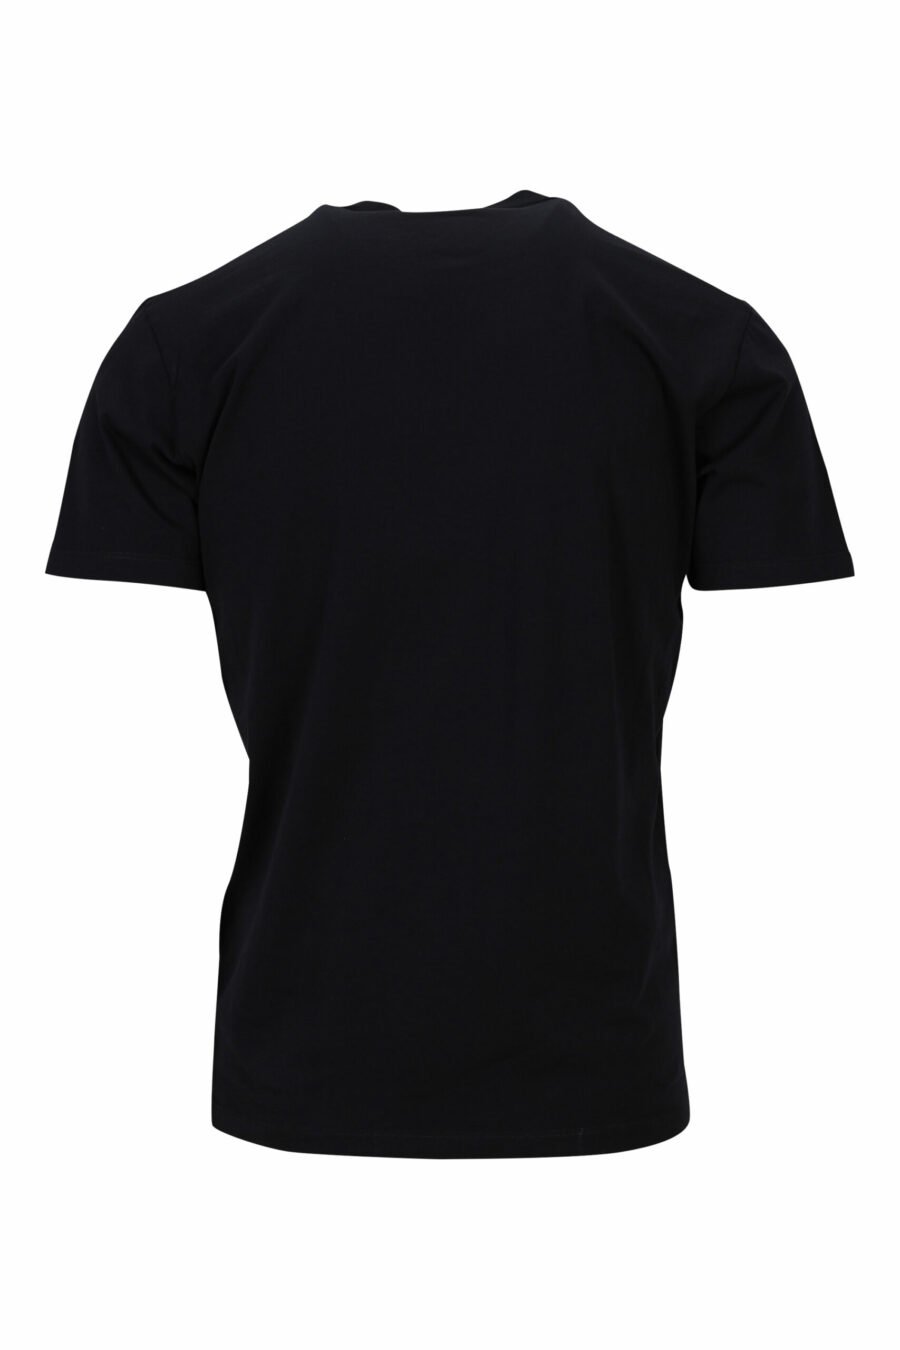 T-shirt noir avec maxilogo blanc "suburbans" - 8054148503932 1 scaled